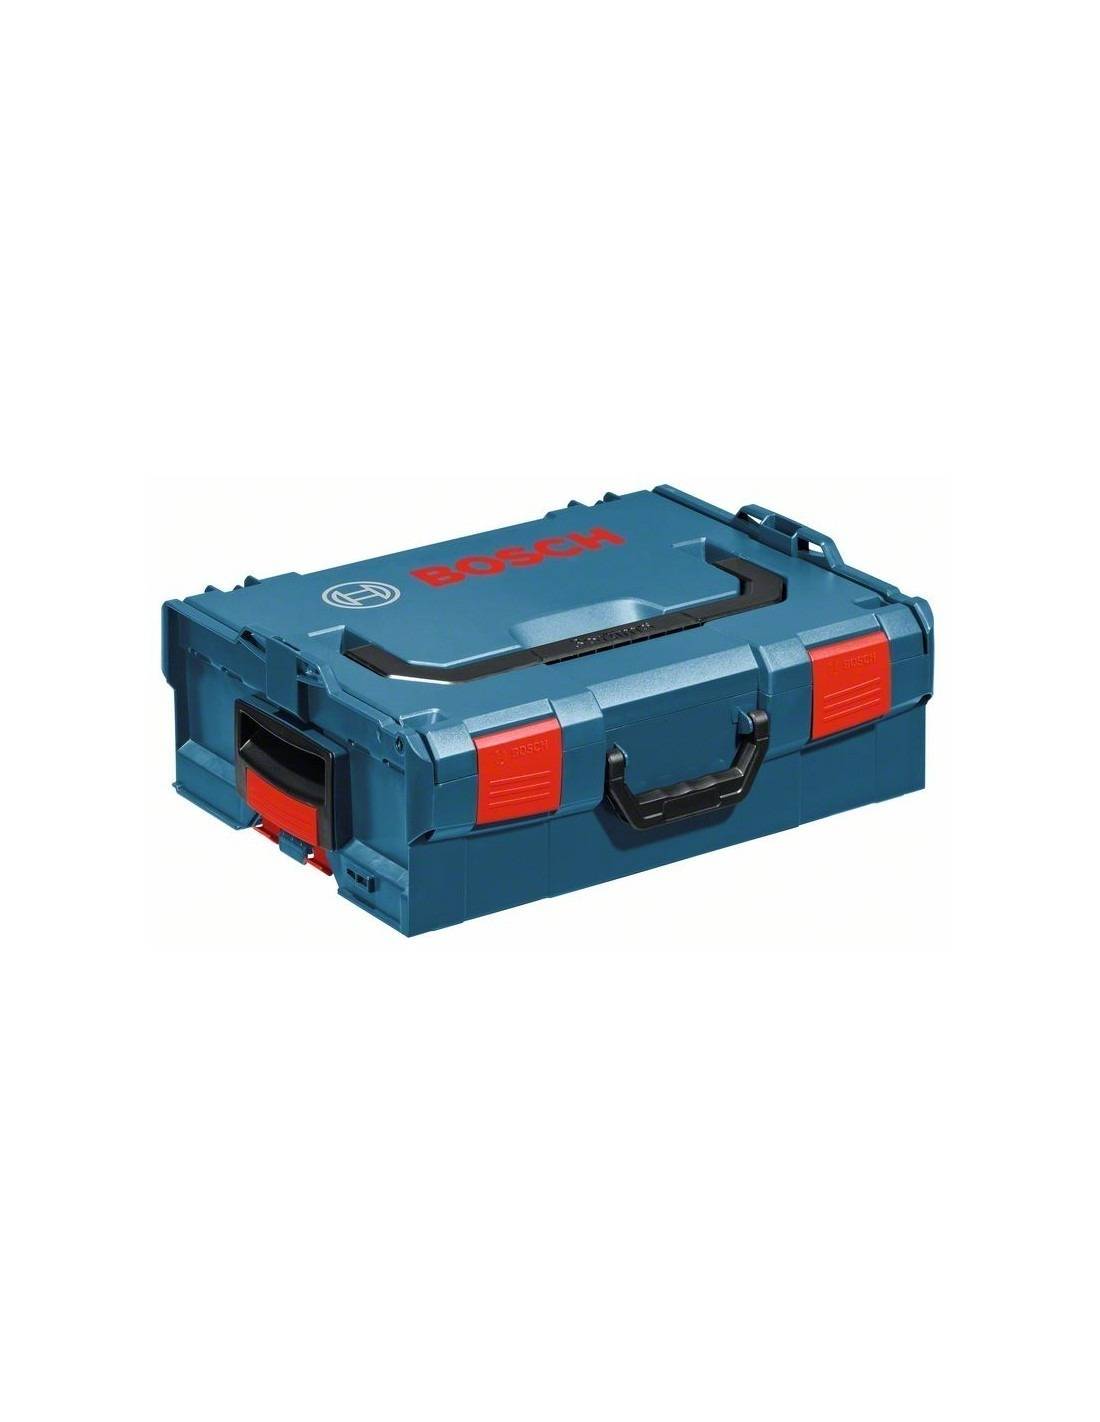 Coffret De Transport L-boxx 136 - 1600a012g0 - Bosch